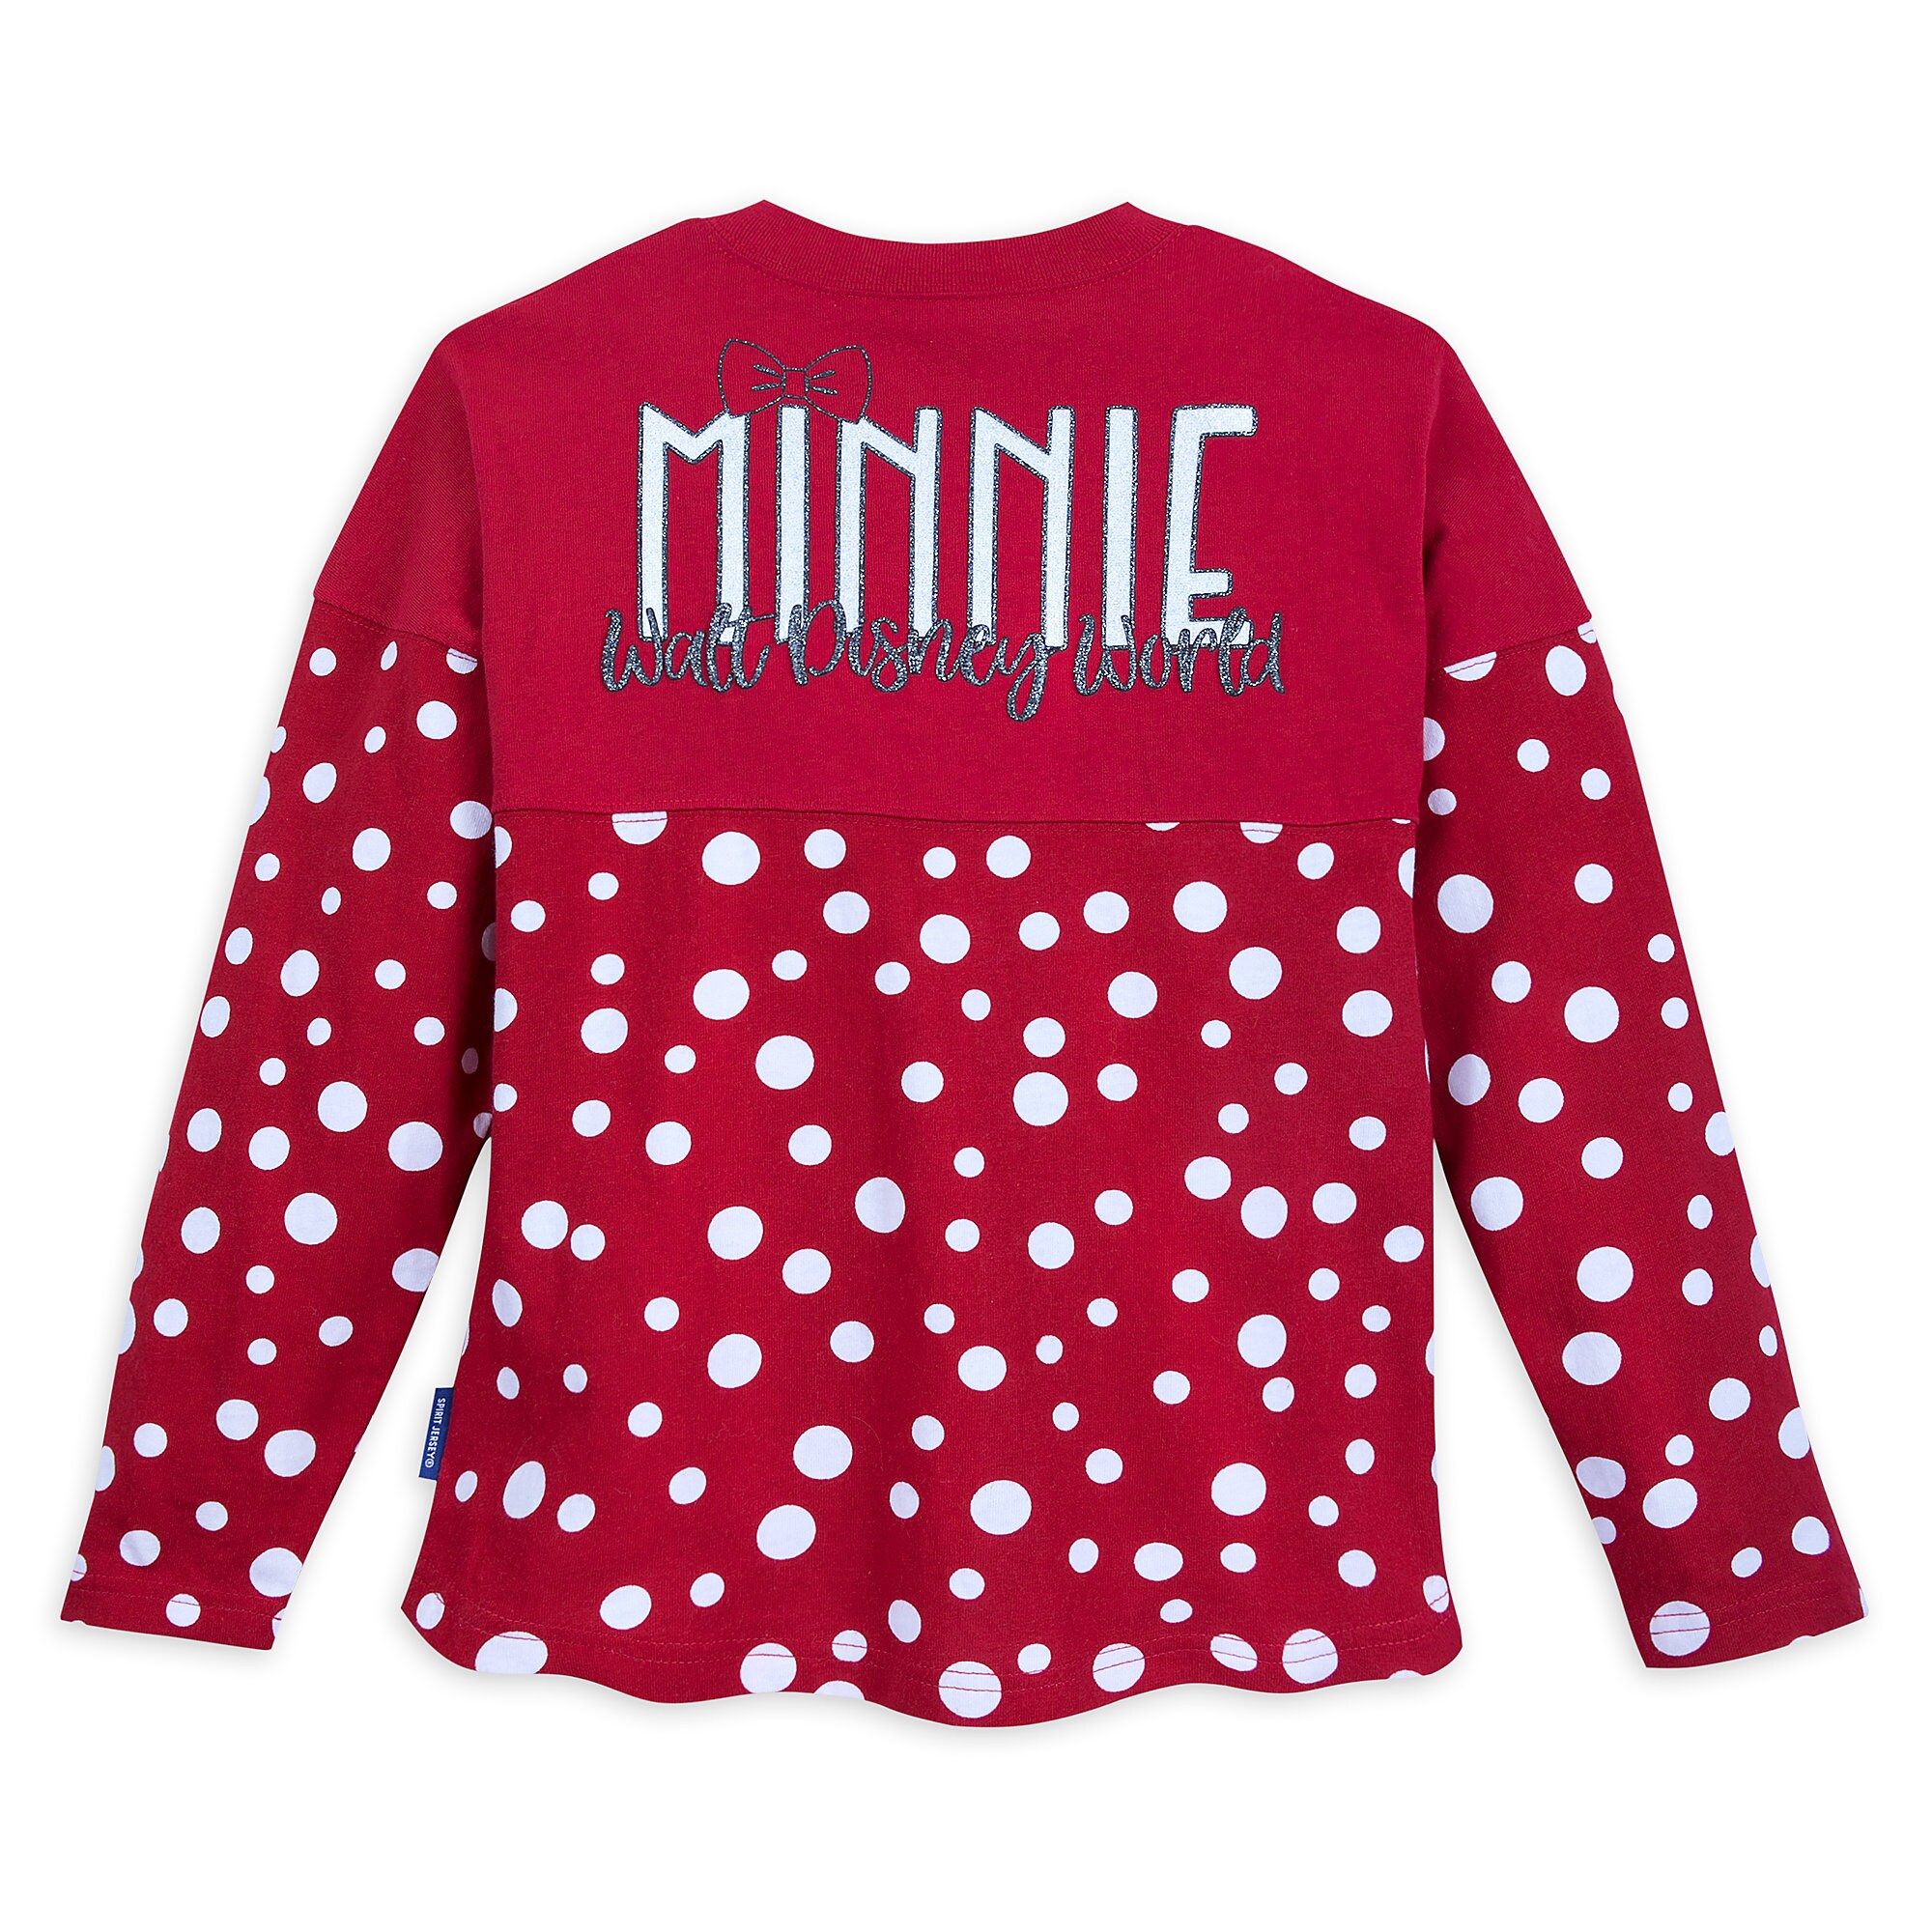 Minnie Mouse Polka Dot Spirit Jersey for Kids - Walt Disney World